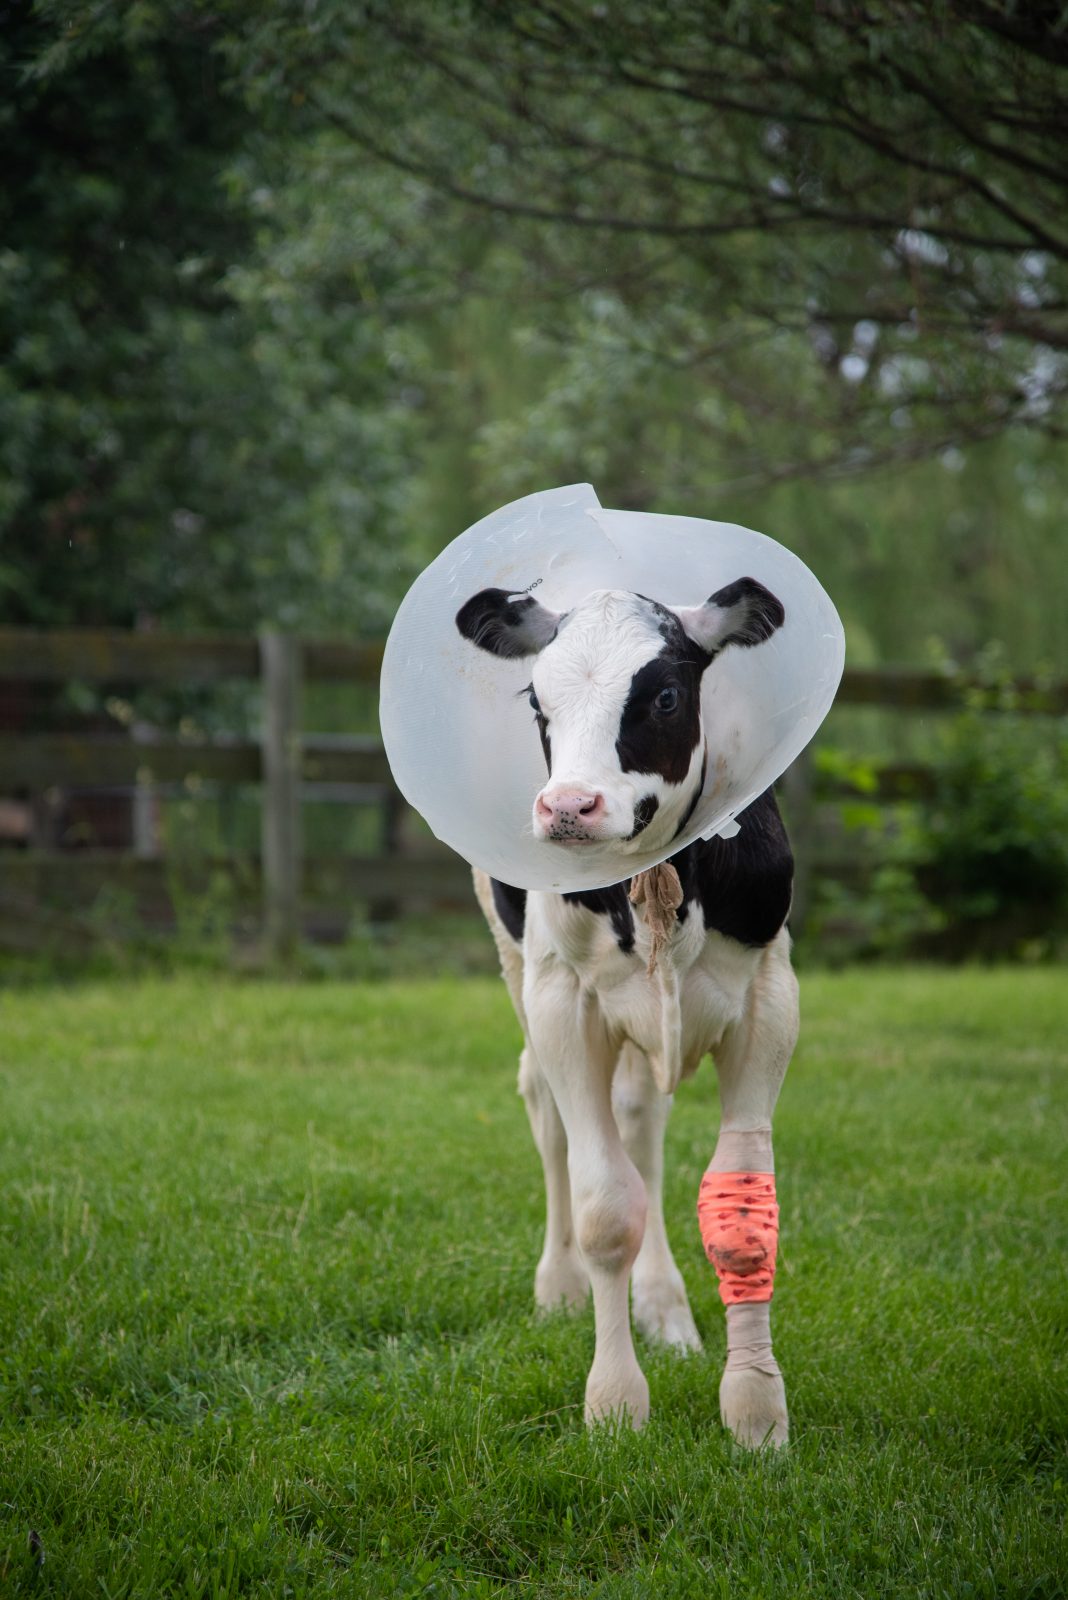 Pietro calf heals at Farm Sanctuary